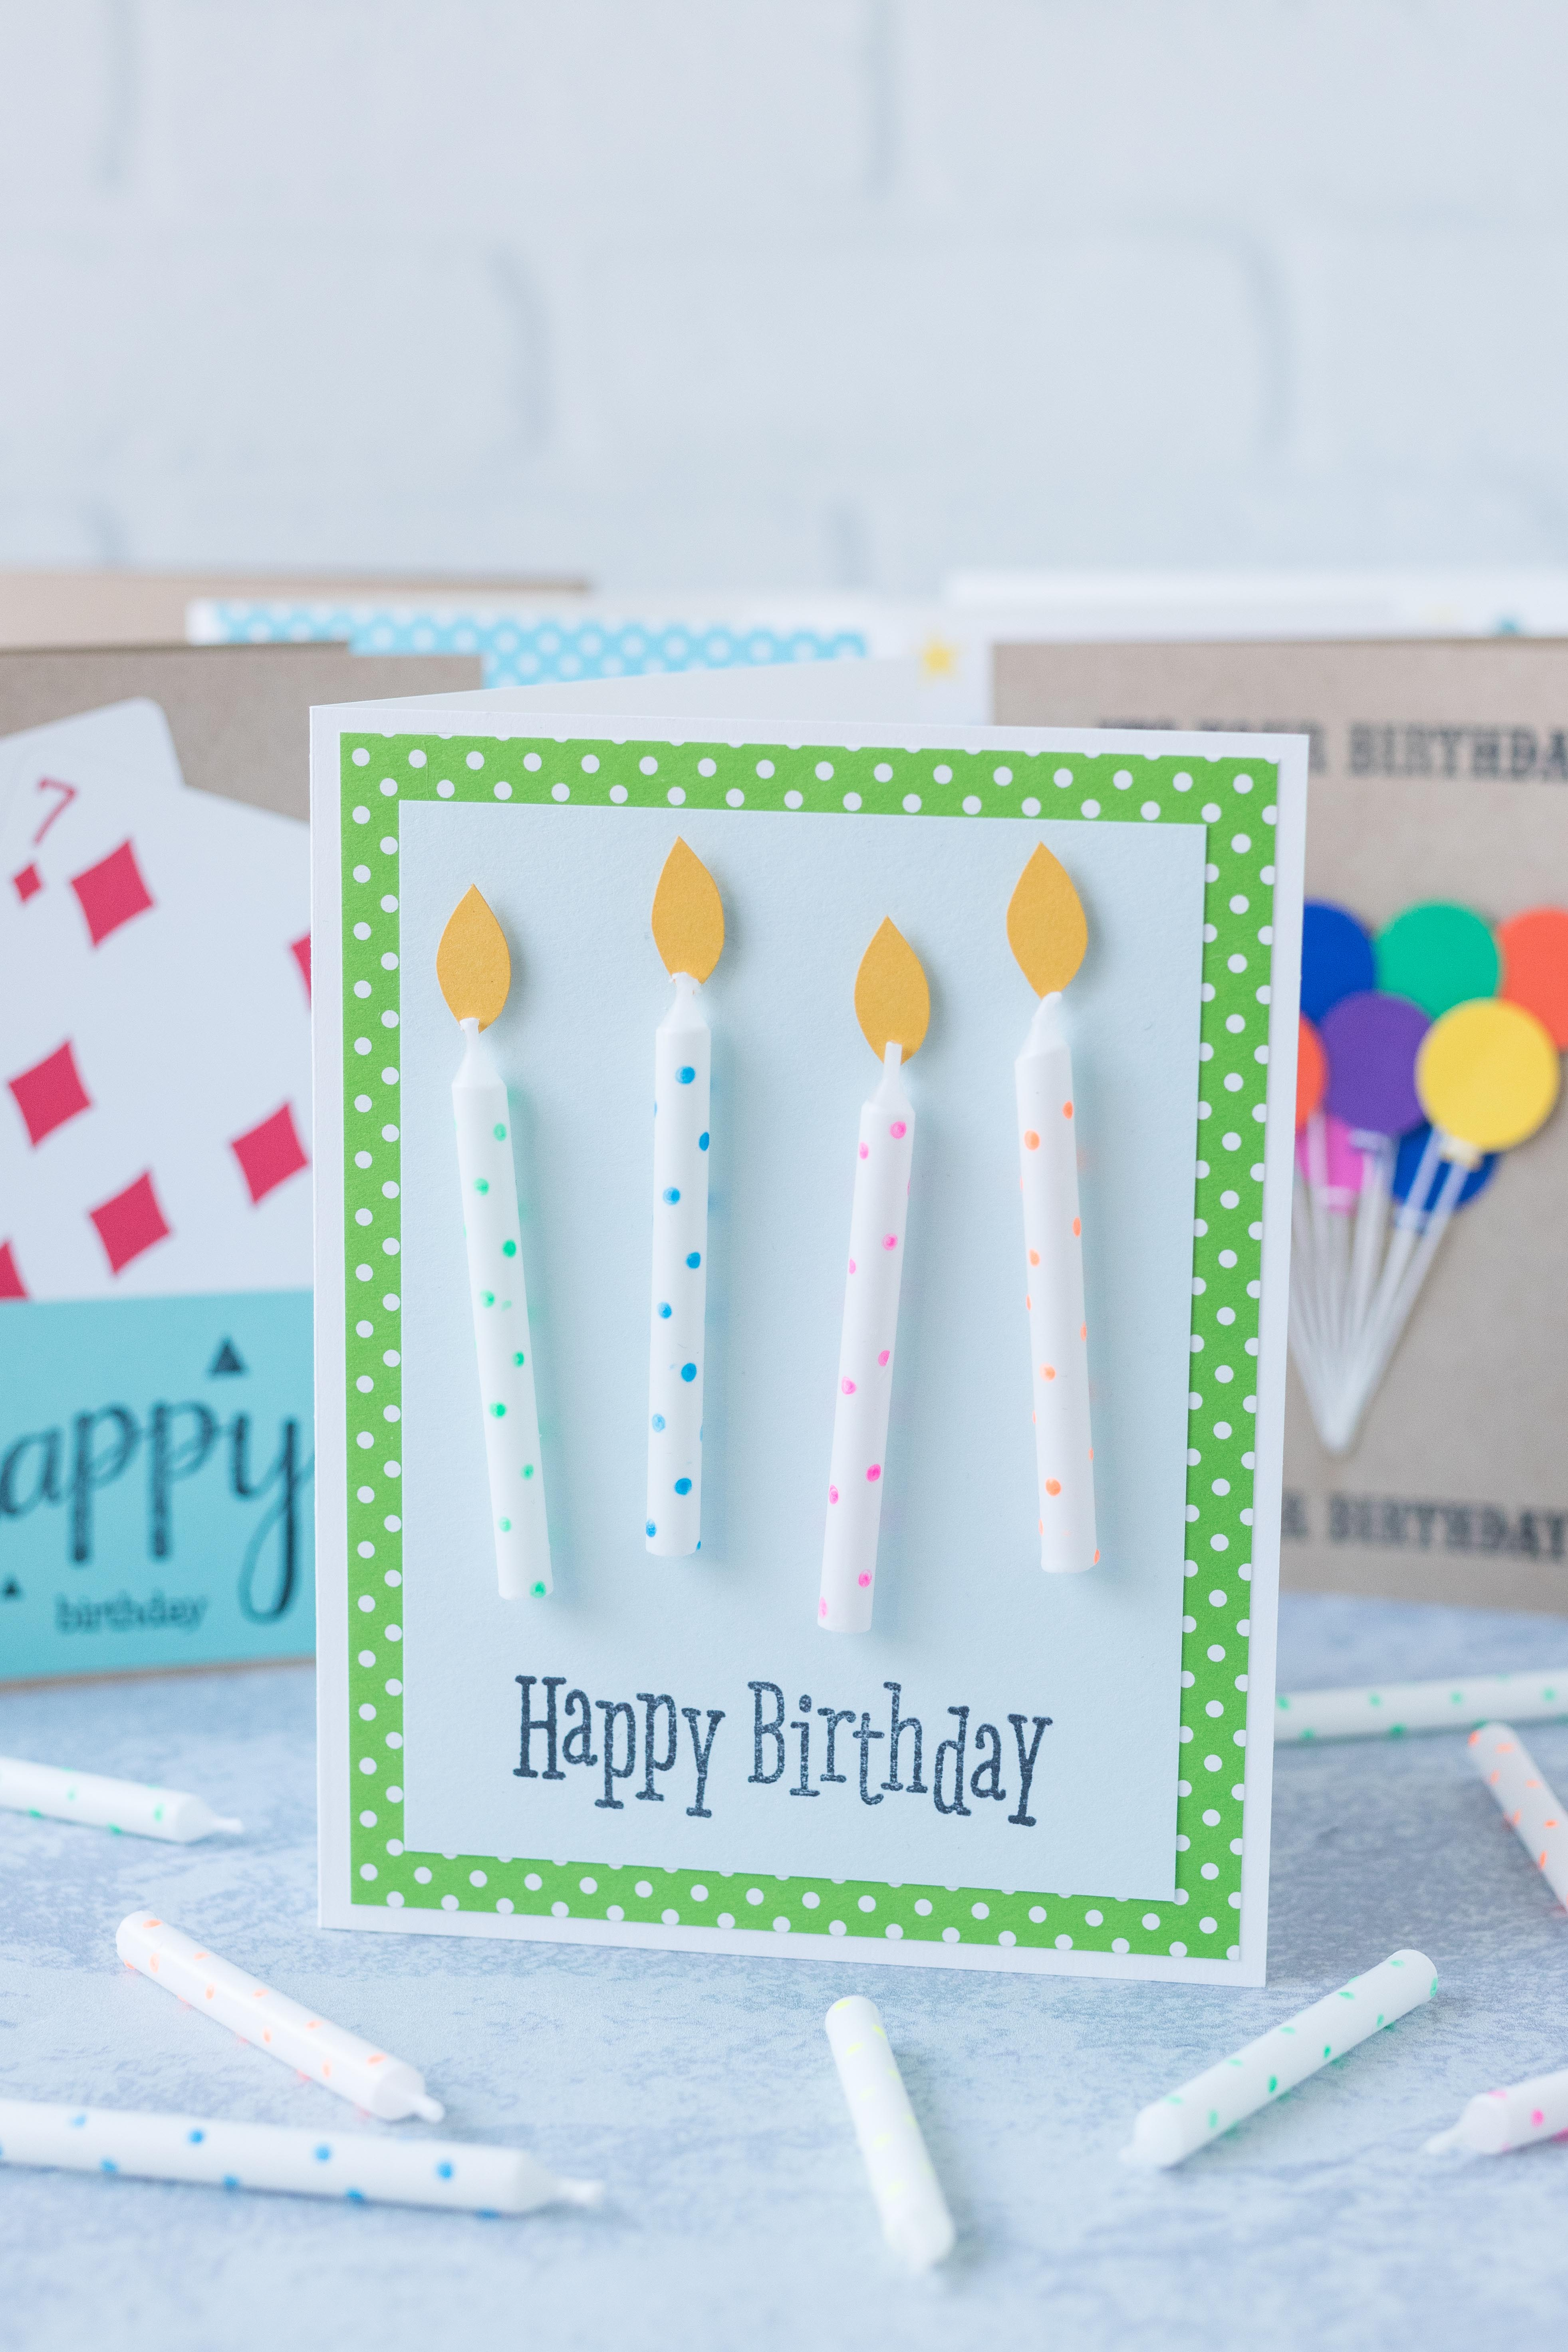 Happy Birthday Homemade Card Ideas 10 Simple Diy Birthday Cards Rose Clearfield